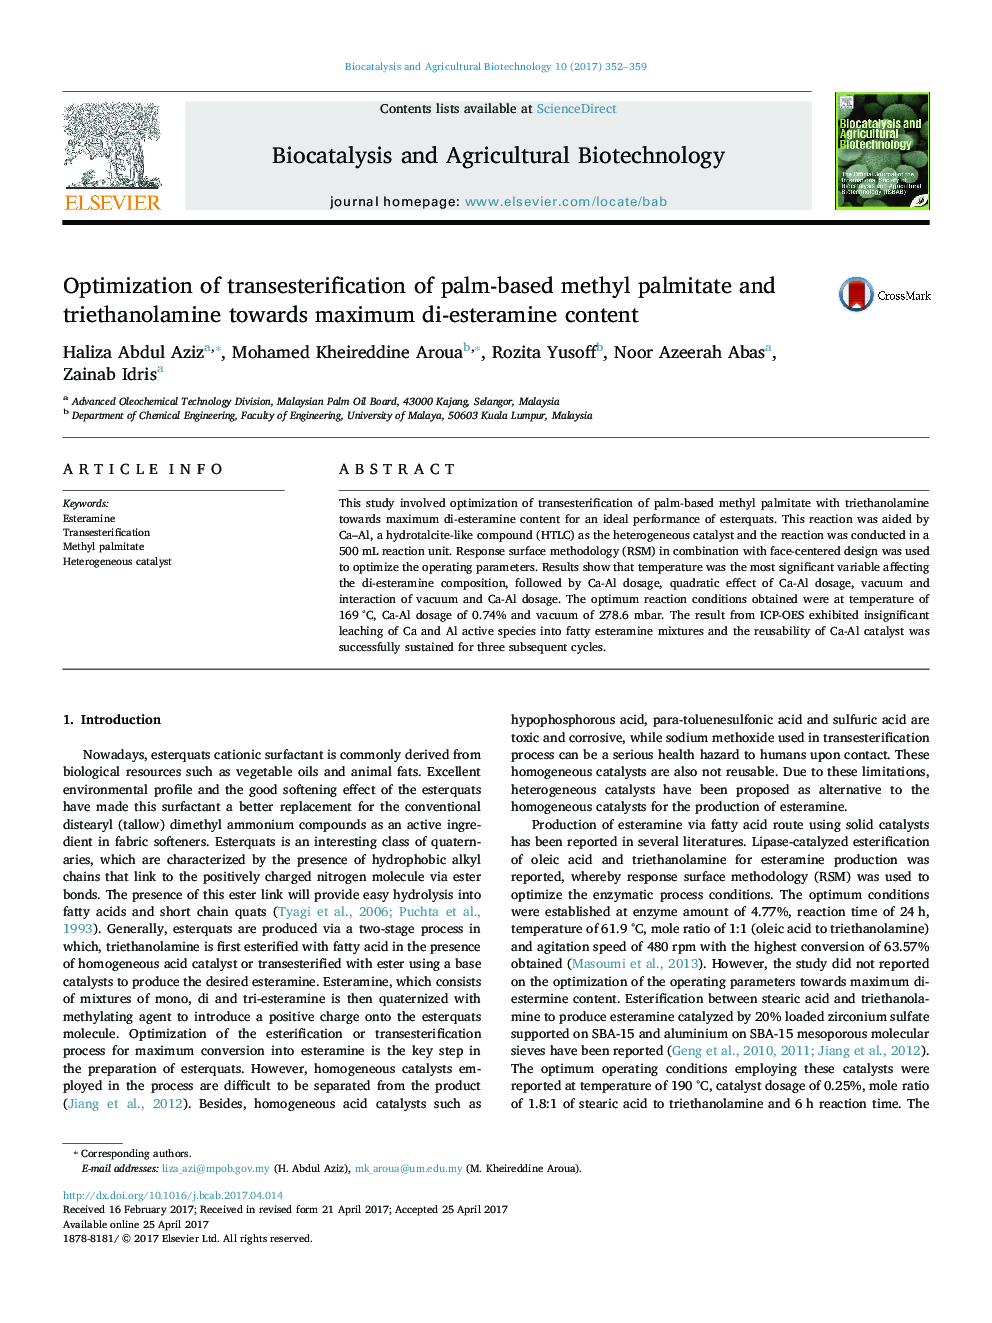 Optimization of transesterification of palm-based methyl palmitate and triethanolamine towards maximum di-esteramine content